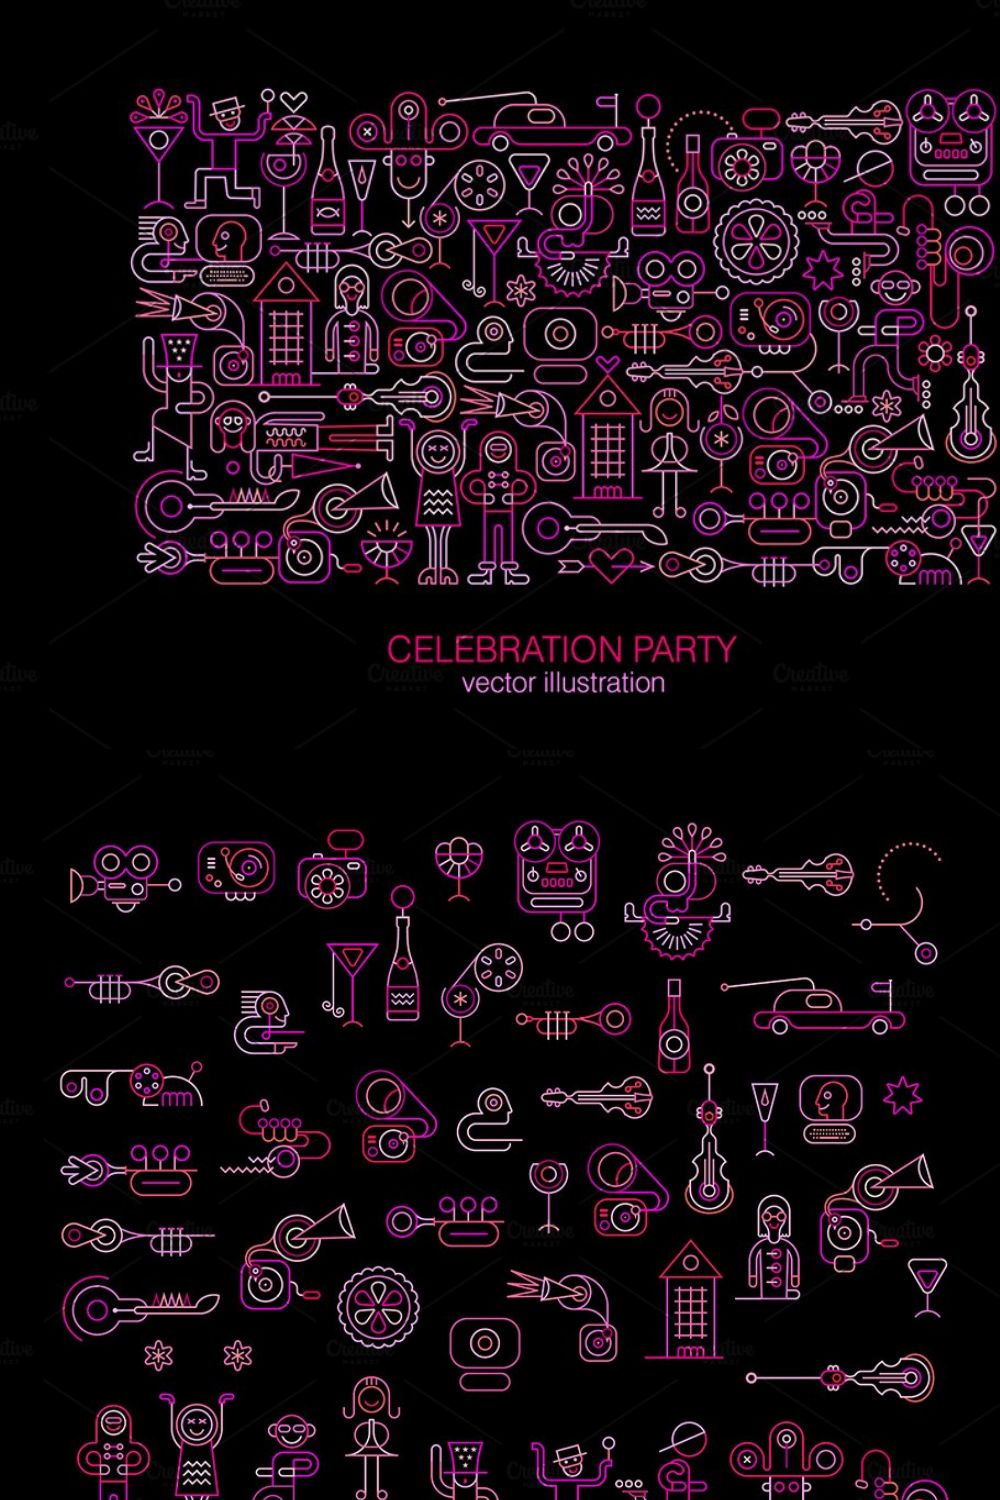 Celebration Party vector design pinterest preview image.